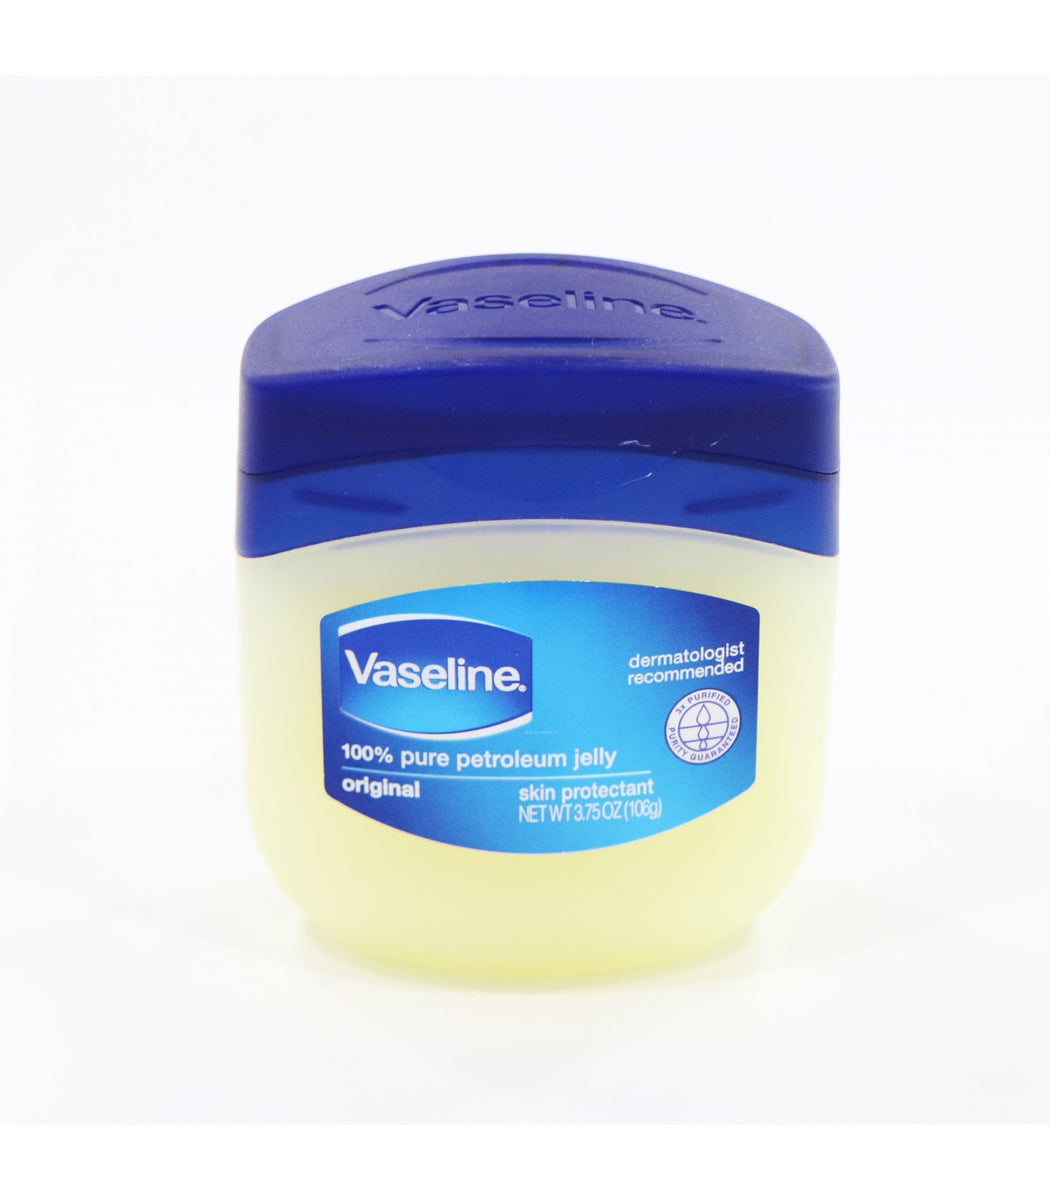 Vaseline 100% Pure Petroleum Jelly Skin Protectant 49g 